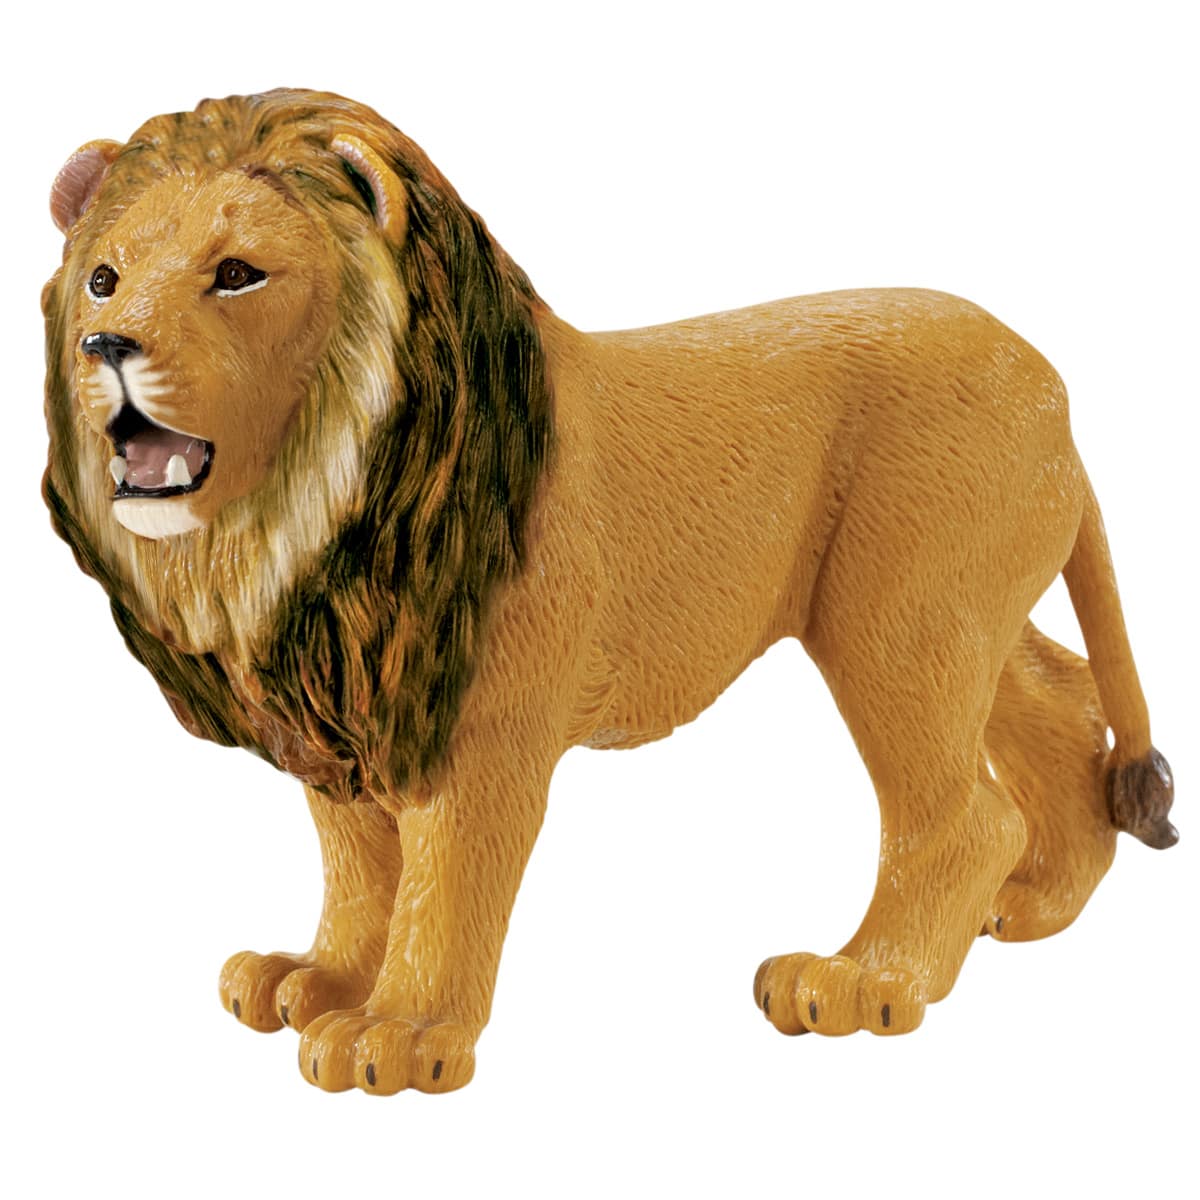 Lion by Safari Ltd/ toy/ replica/ VERY NICE 